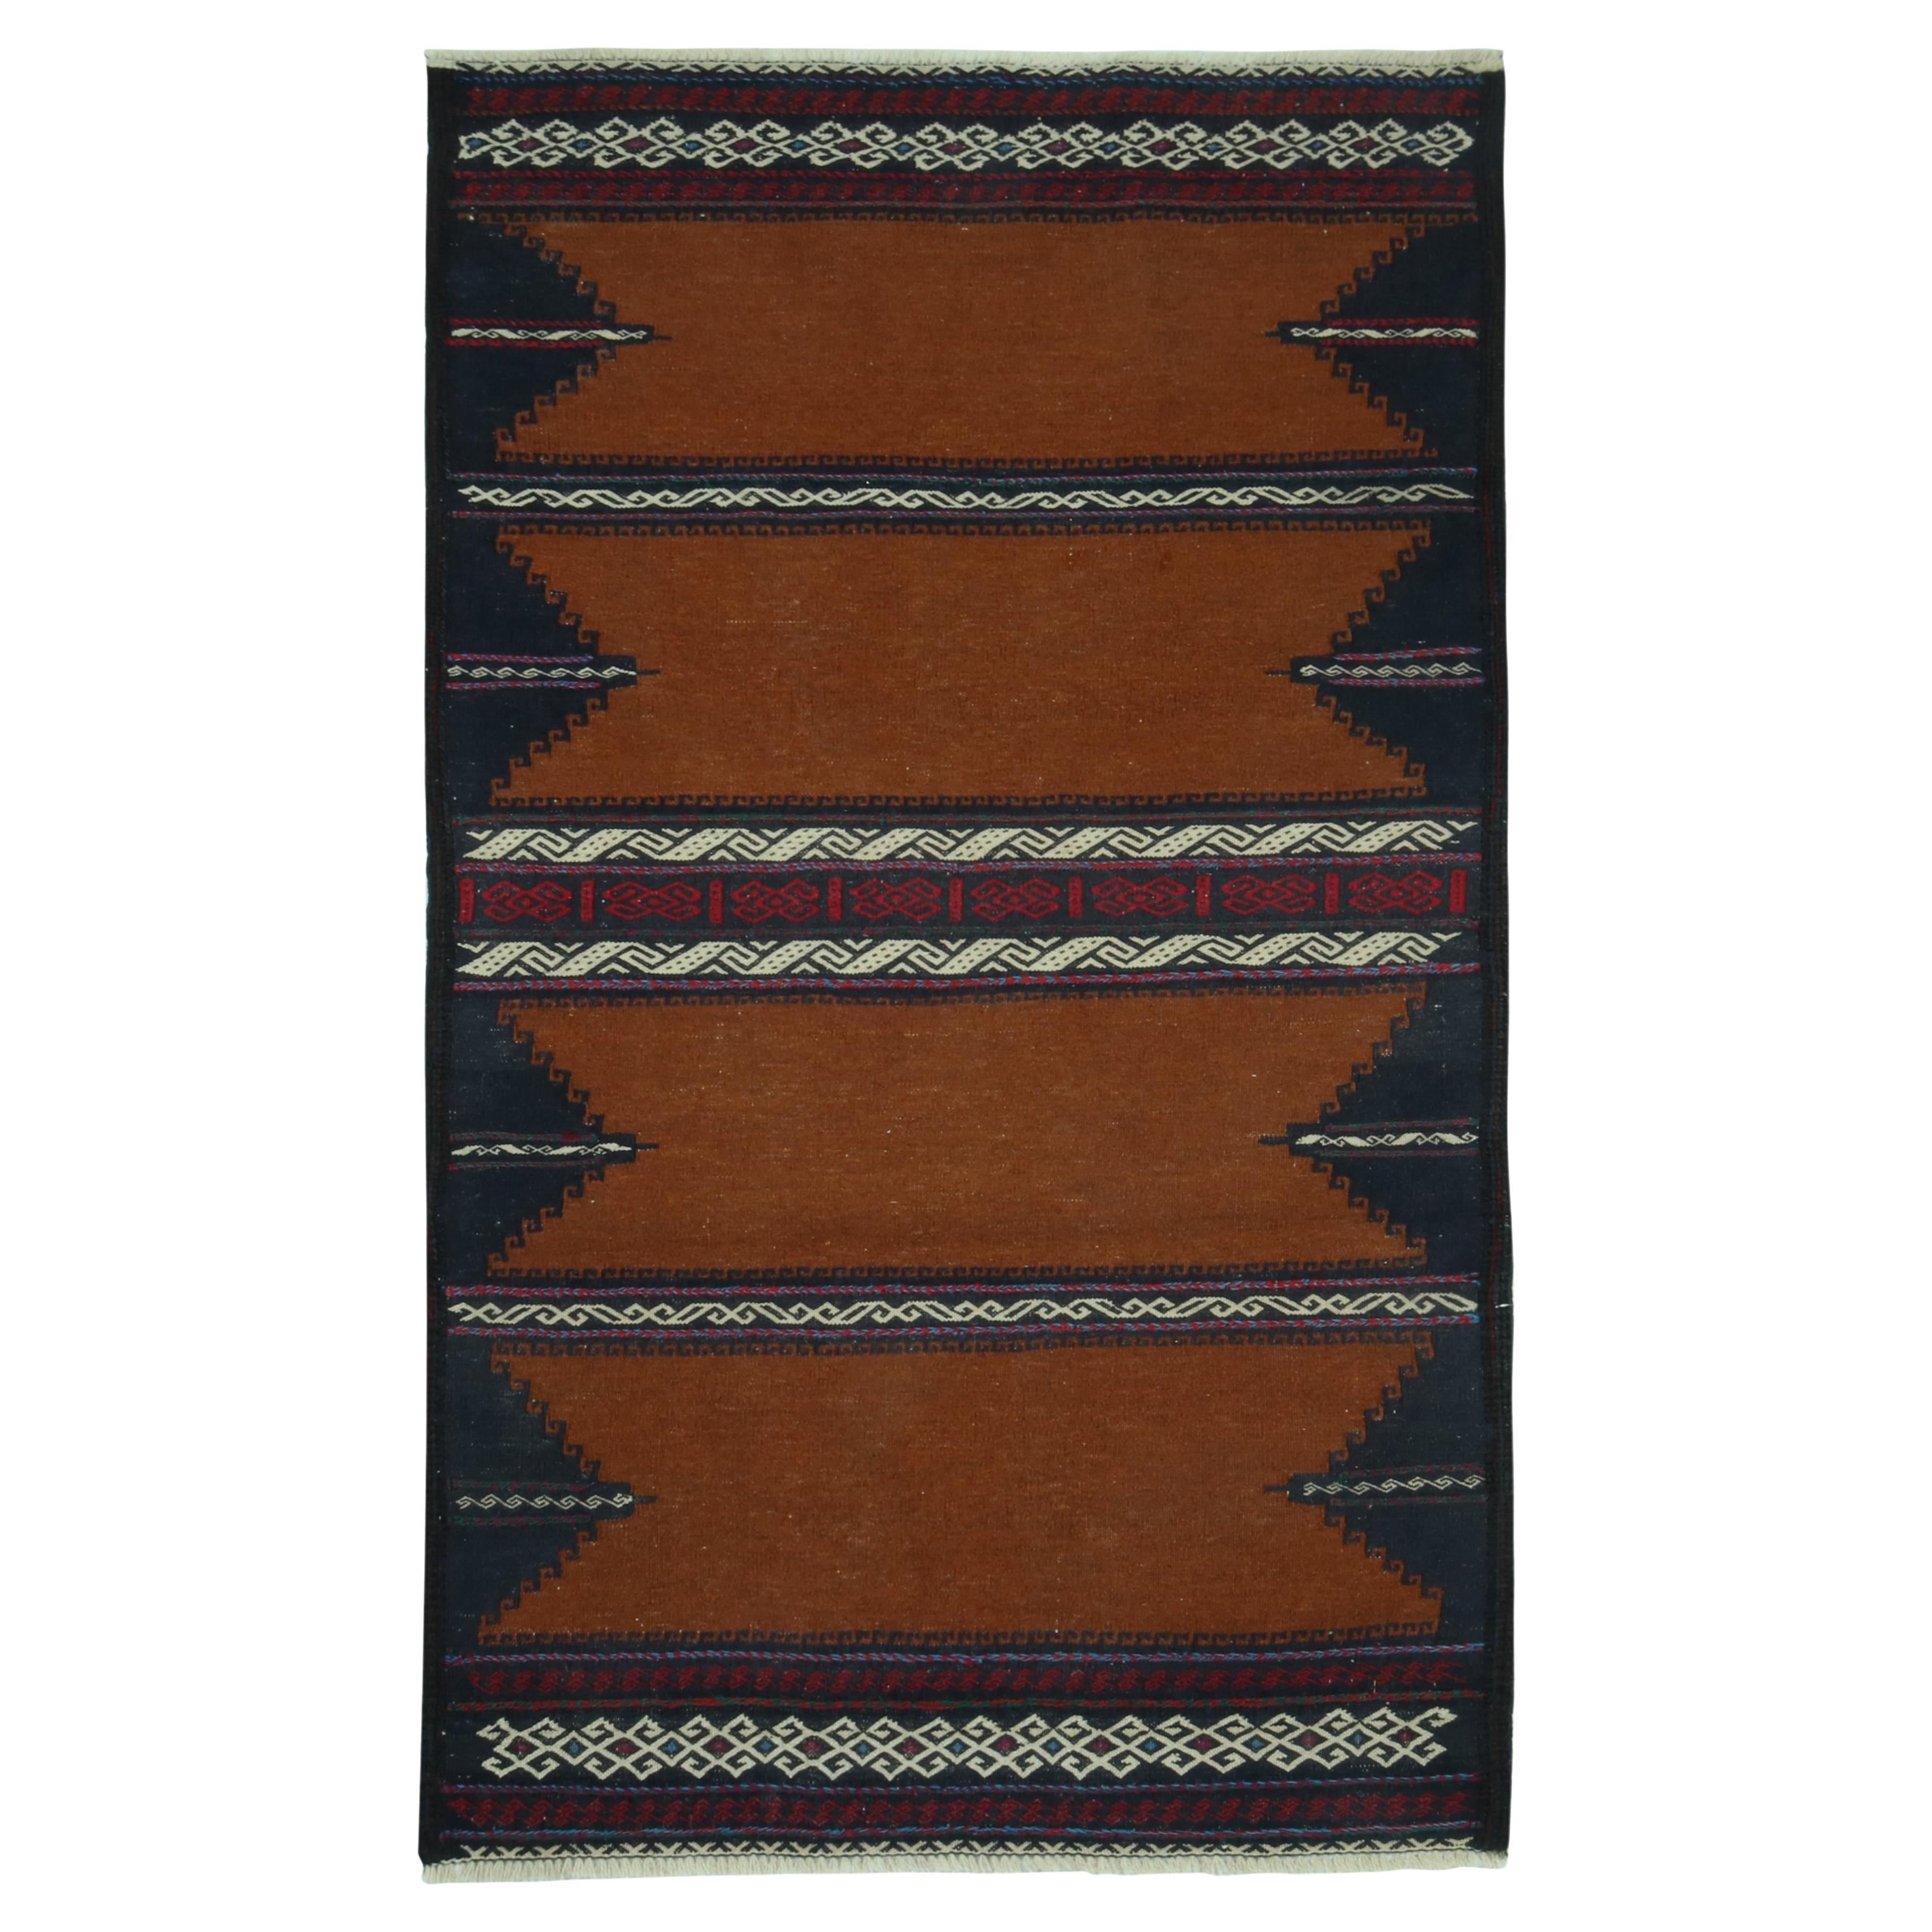 Vintage Sofreh Persian Kilim in Brown with Geometric Patterns, by Rug & Kilim